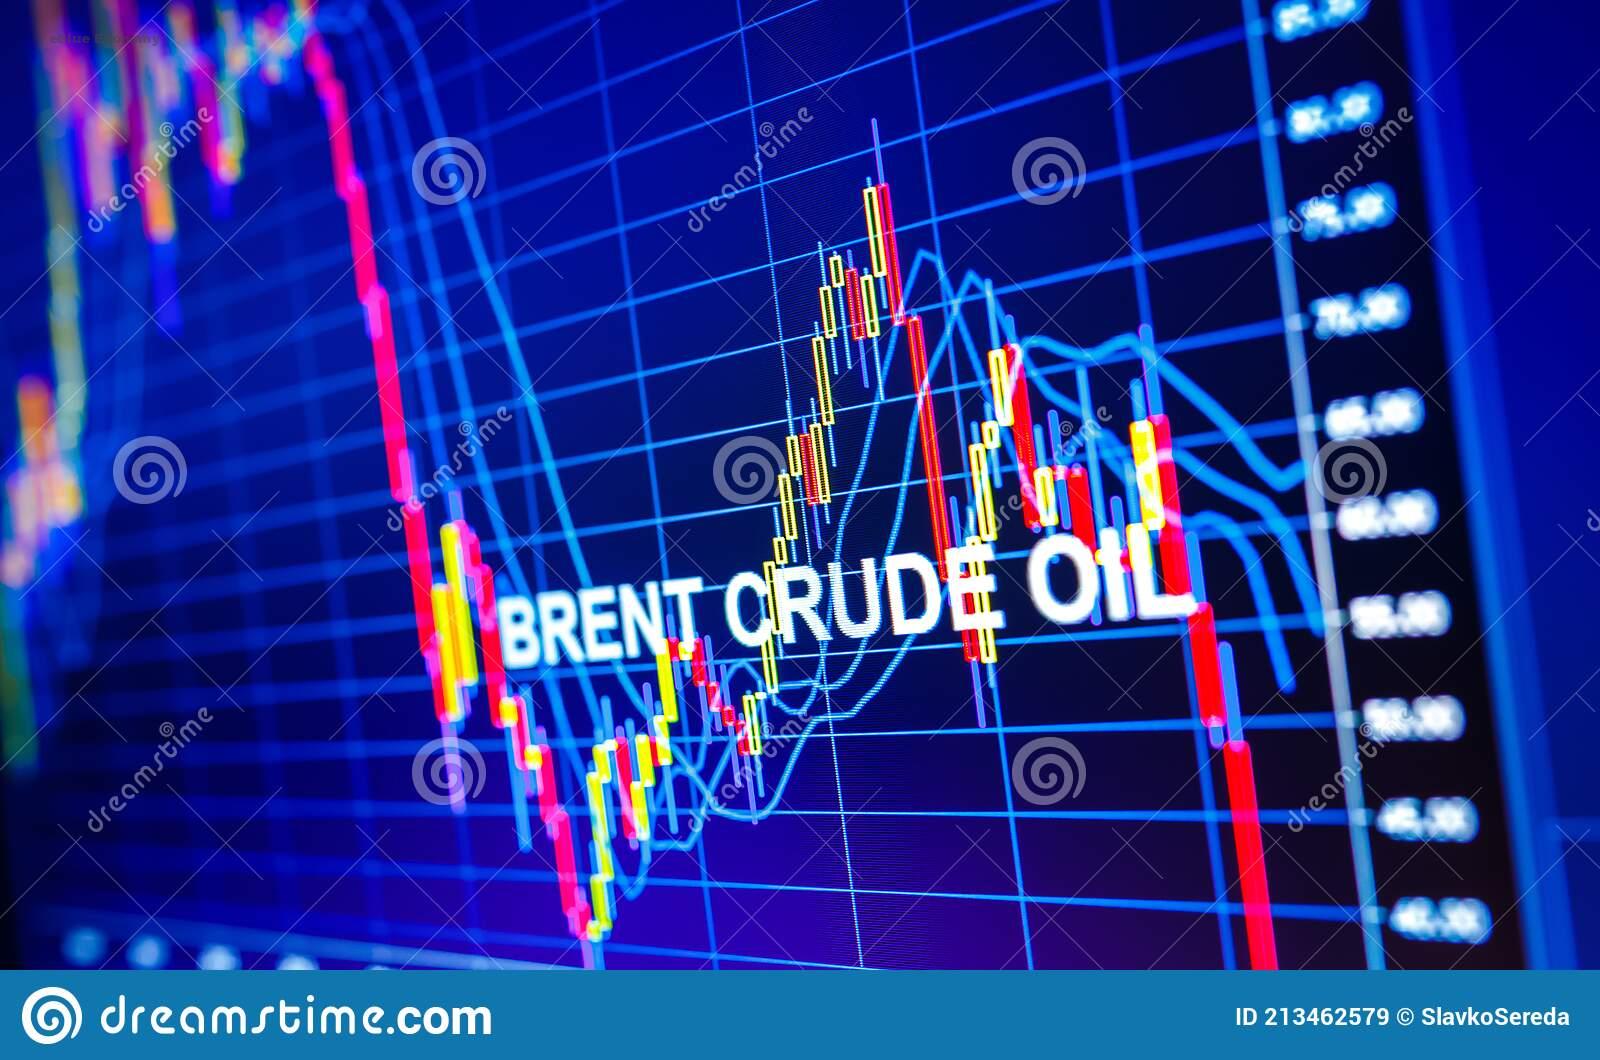 eBlue_economy_Crude oil market sees slight increase of prices